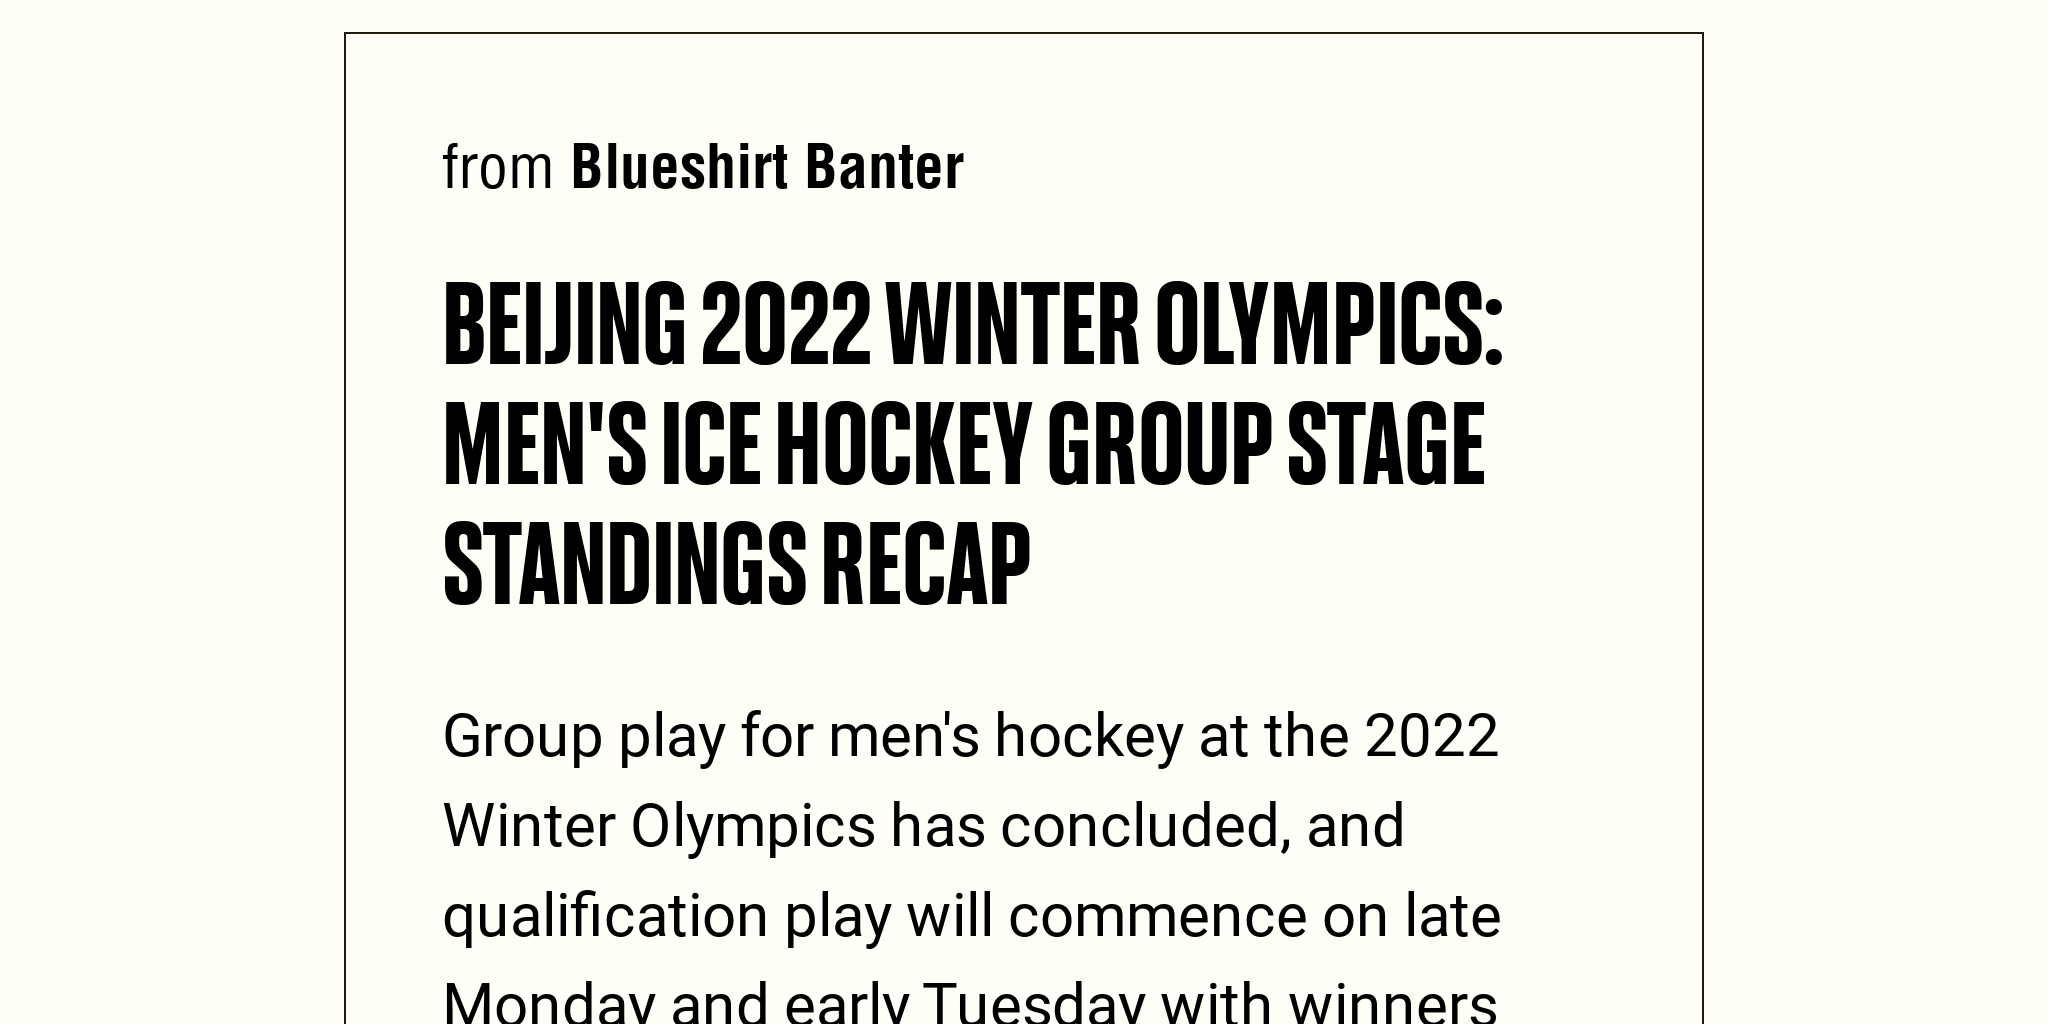 Beijing 2022 Winter Olympics Men's Ice Hockey Group Stage Standings